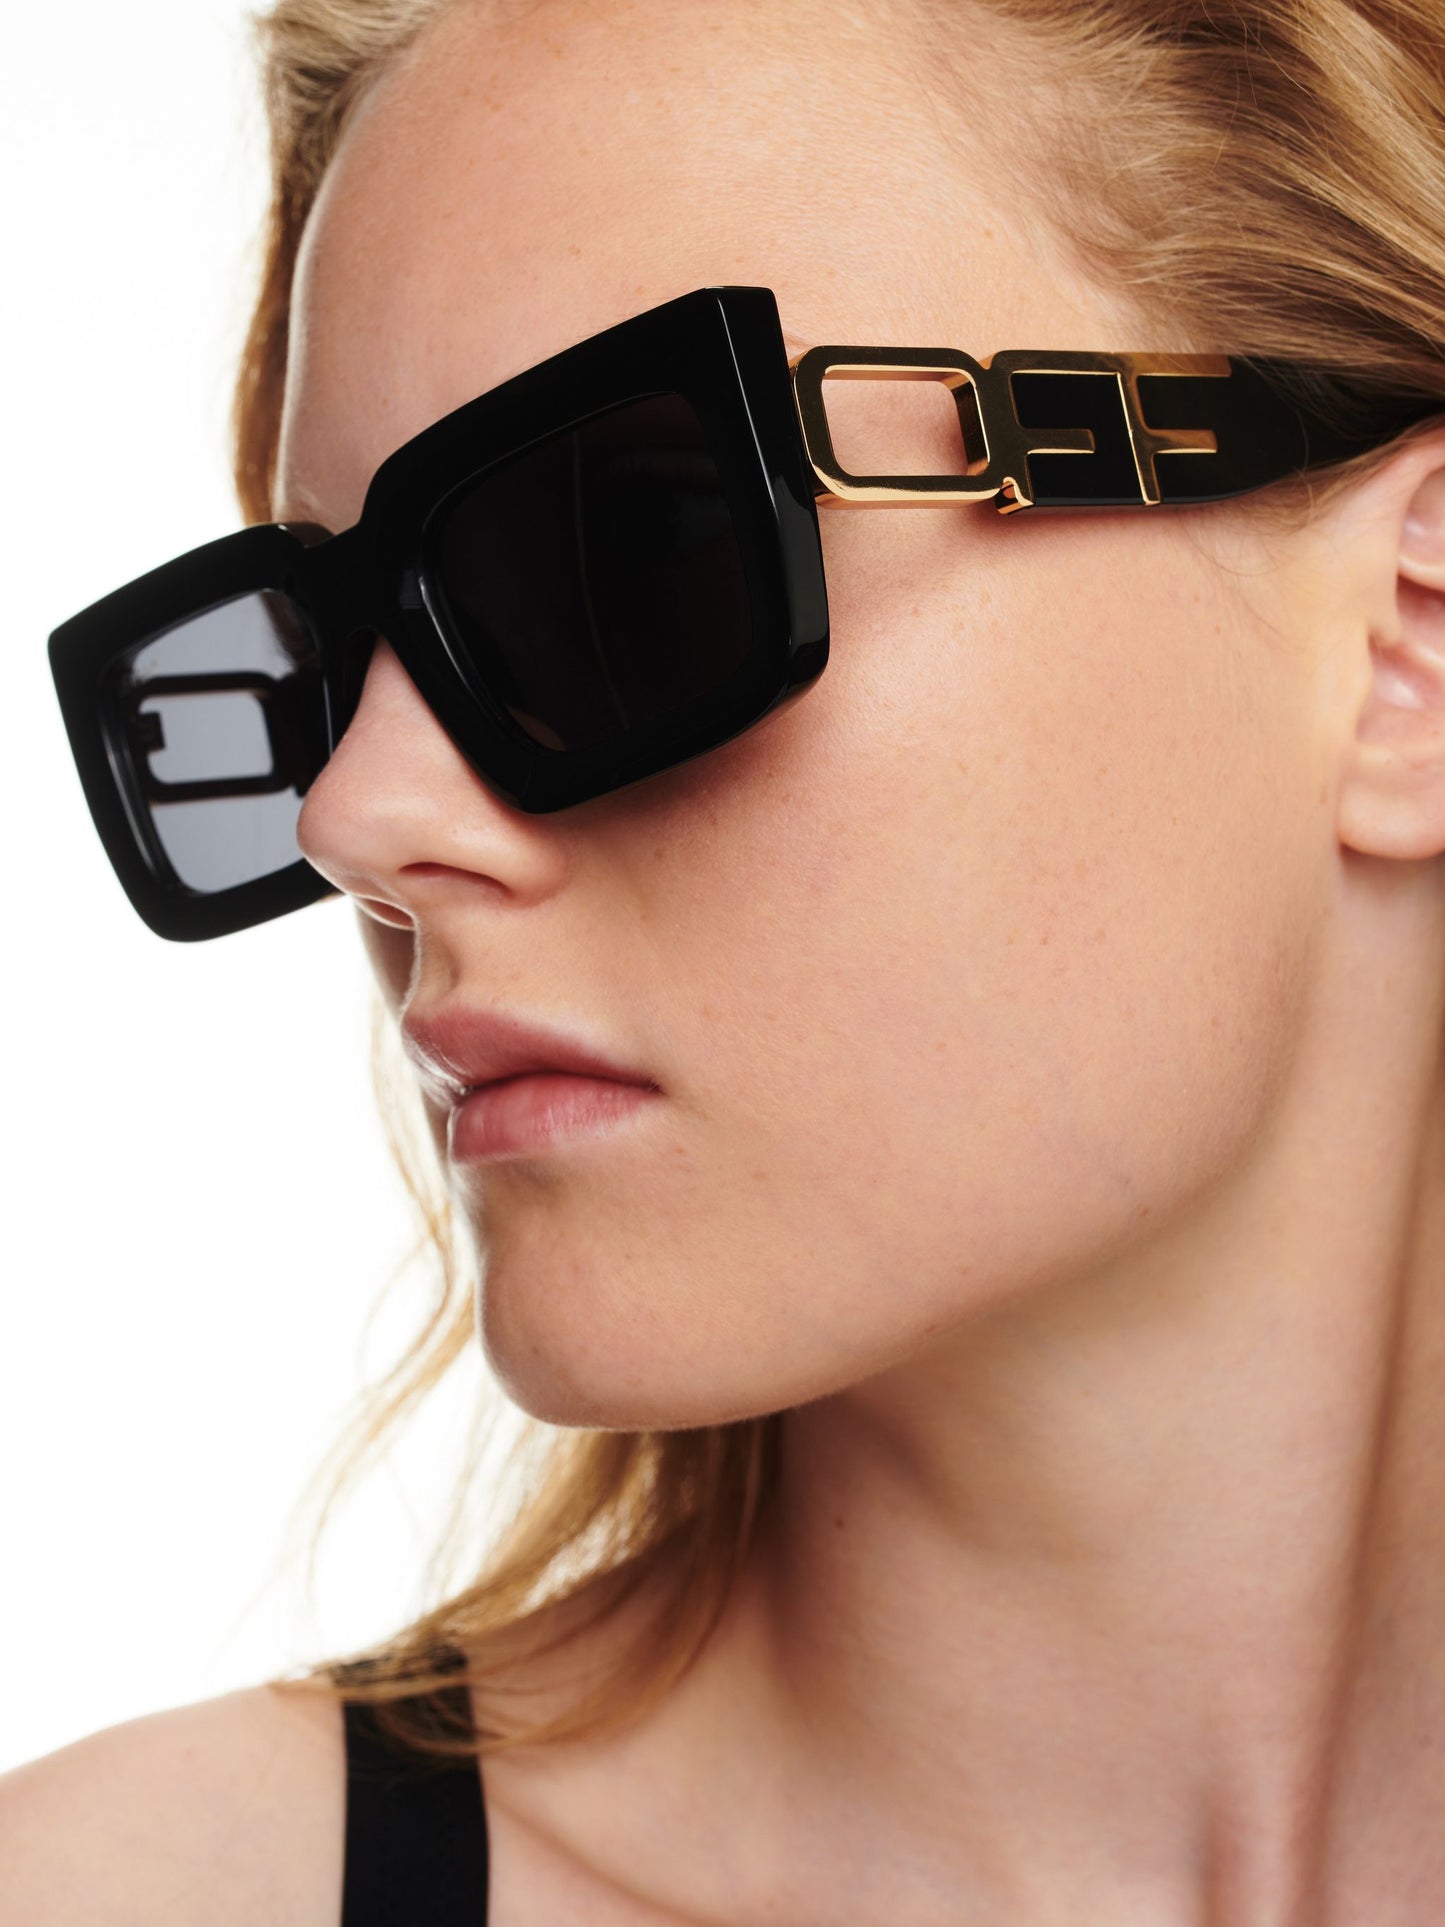 Off-White OERI073S23-PLA0011007-55 55mm New Sunglasses